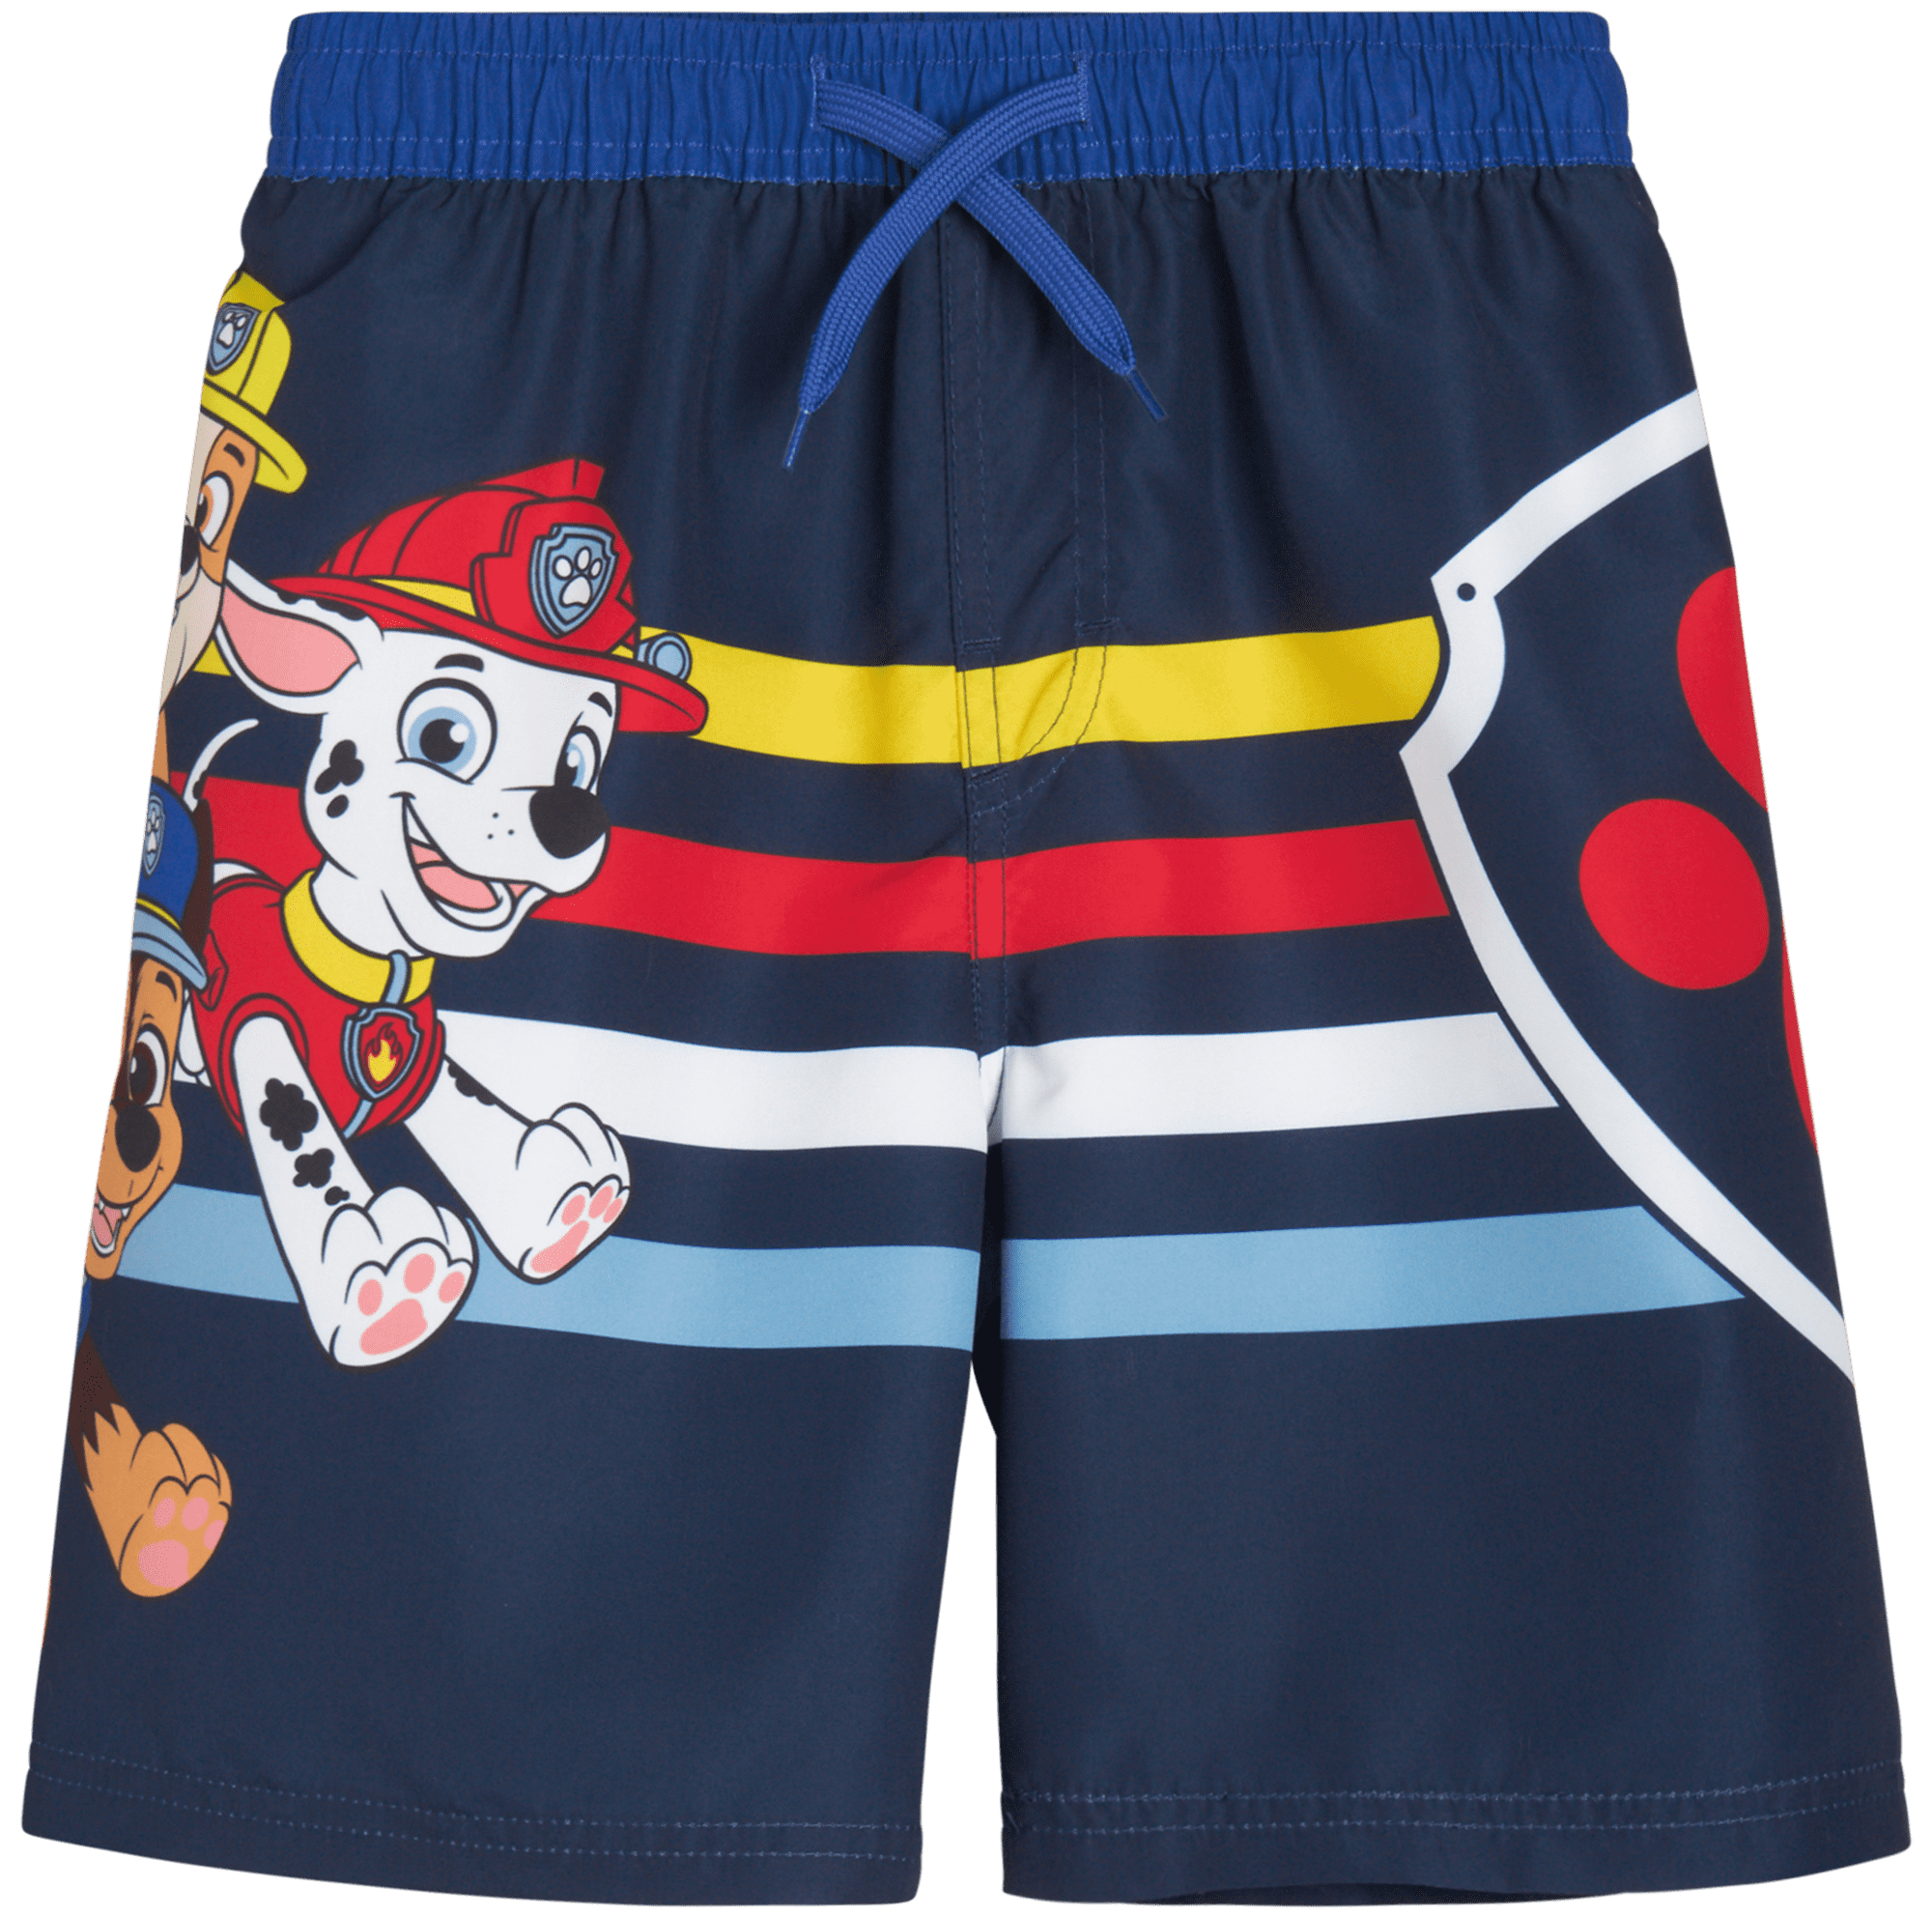 Nickelodeon Paw Patrol Boys Swim Trunks Size 5/6 Comfort Liner Swimming Pants 